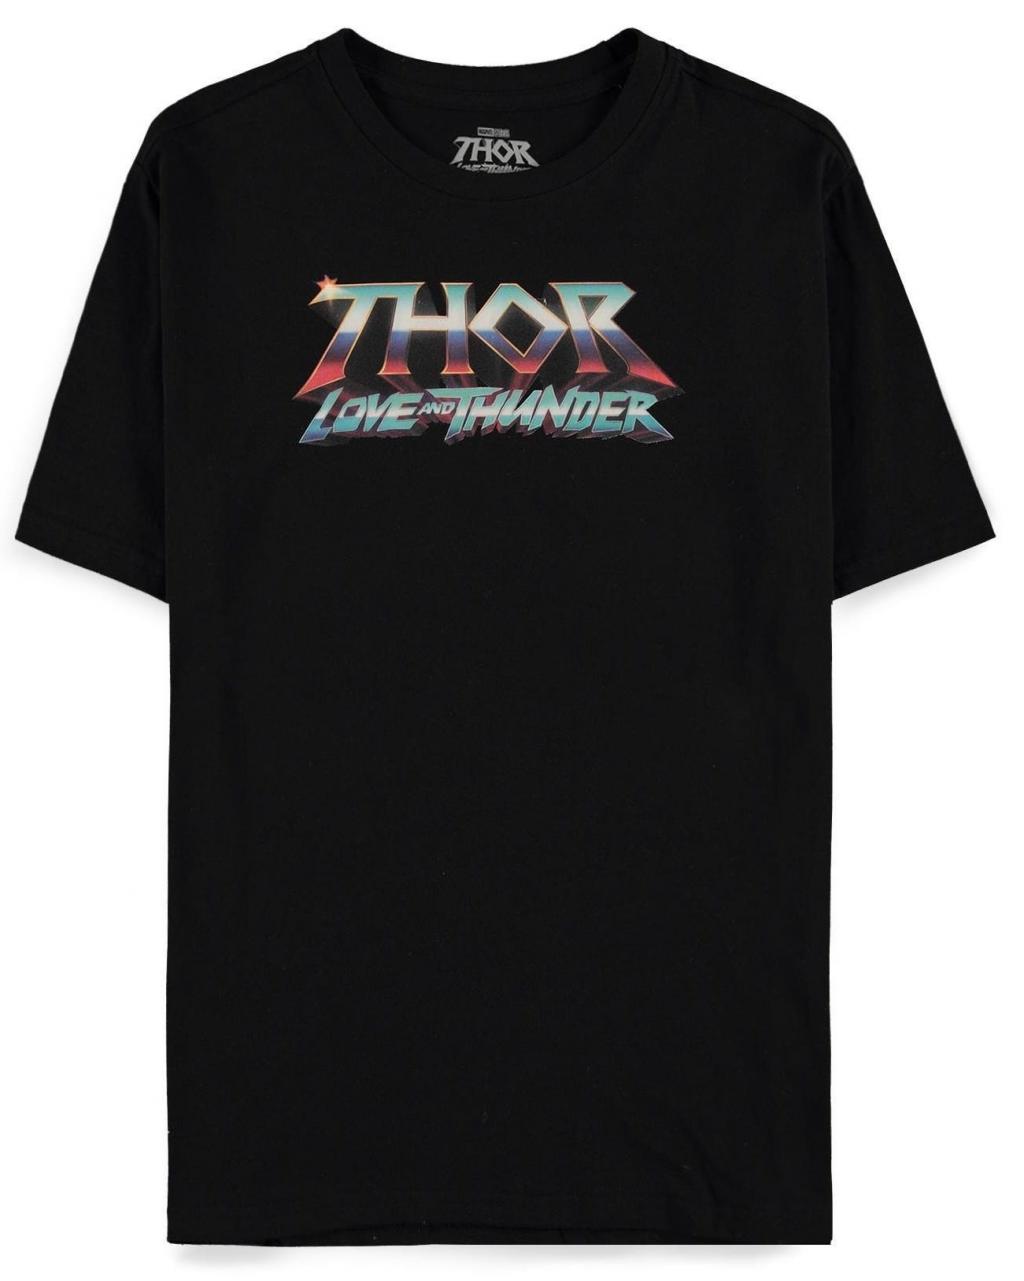 MARVEL - Thor: Love and Thunder - T-Shirt Homme (L)